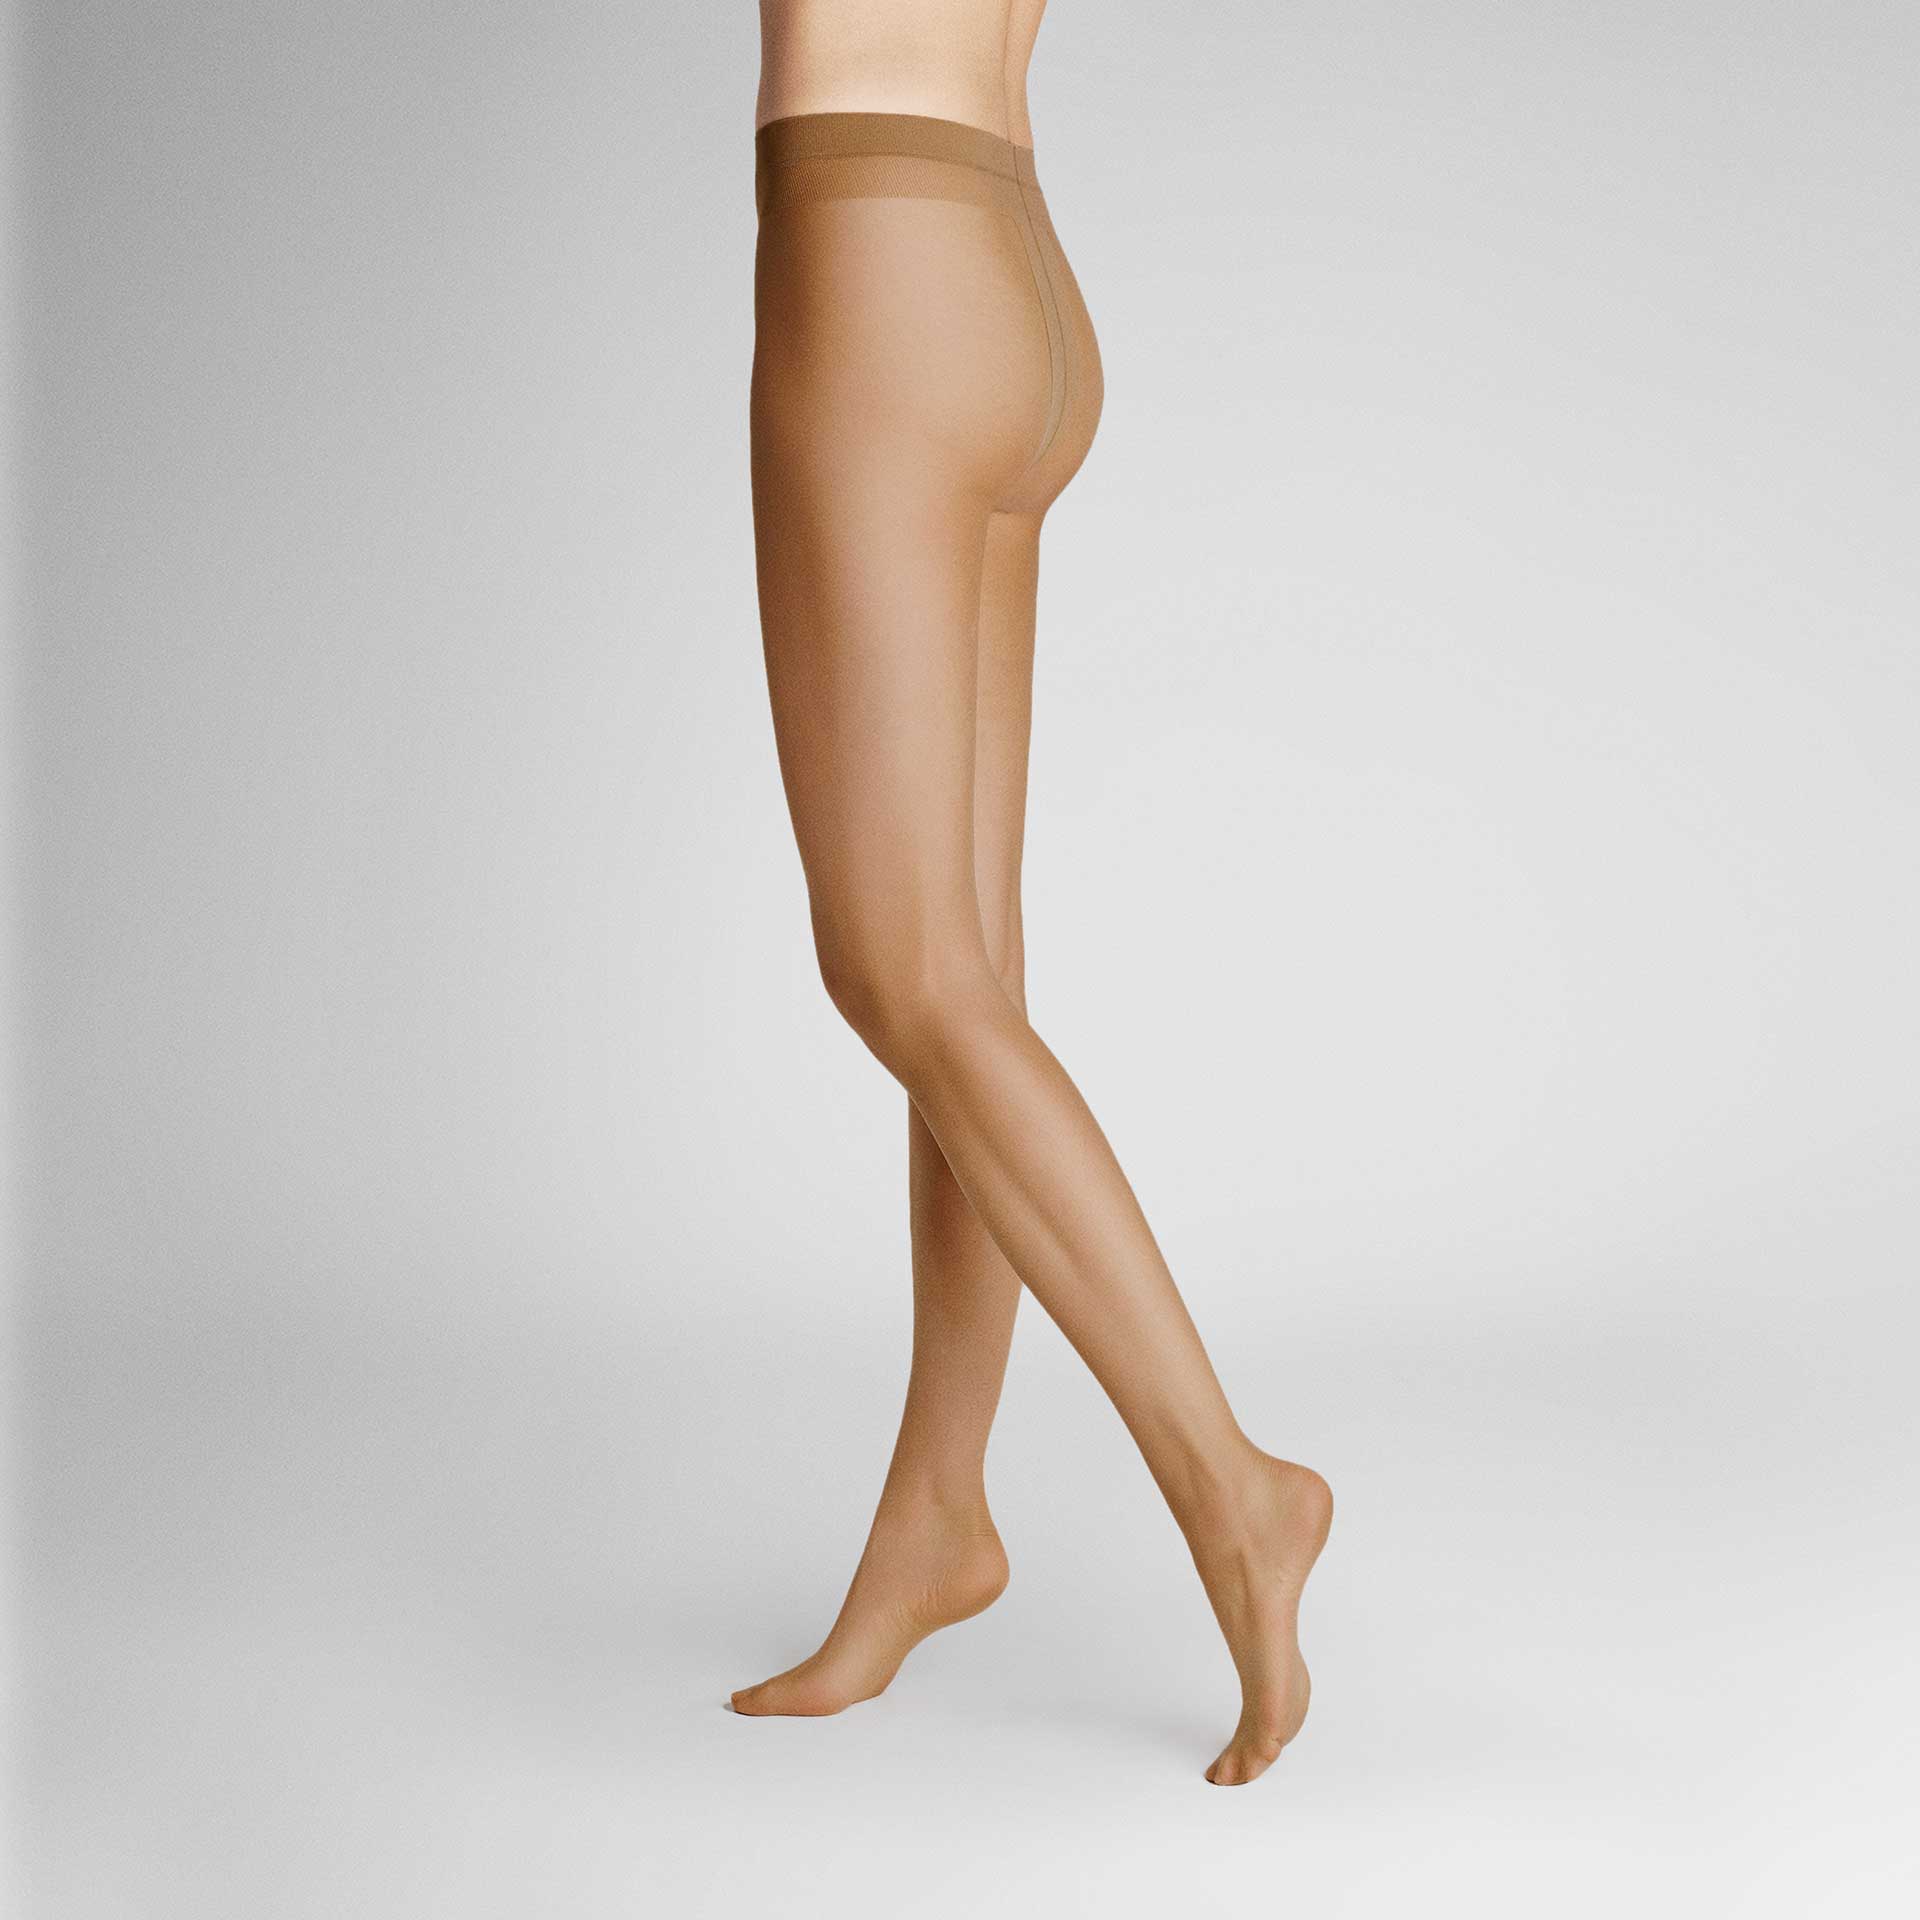 HUDSON Damen LIGHT 8 -  42/44 - Strumpfhose im perfekten Nude-Look - Brasil (Dunkel Beige)